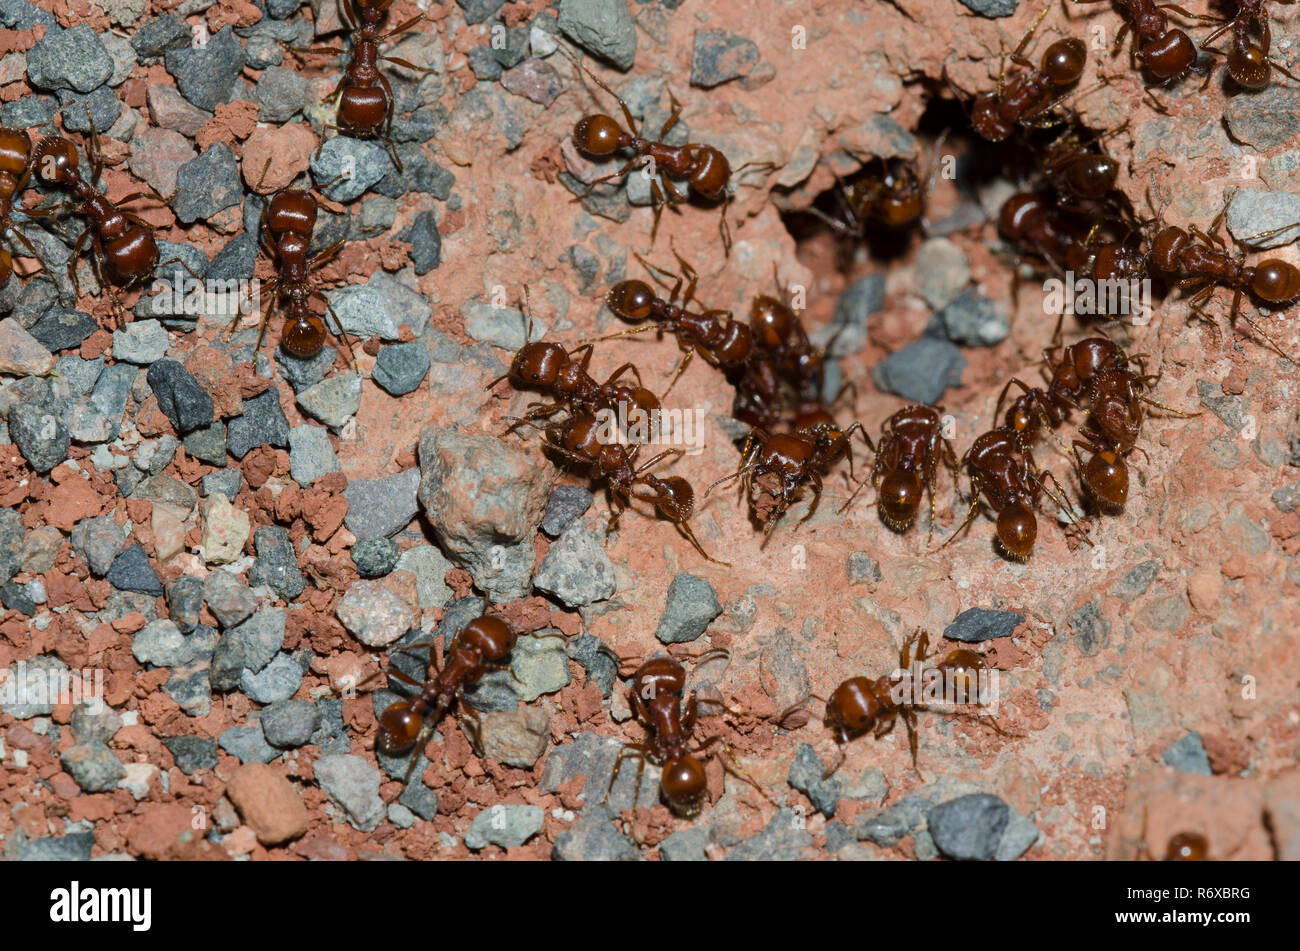 Red Harvester Ants, Pogonomyrmex barbatus, at nest entrance Stock Photo